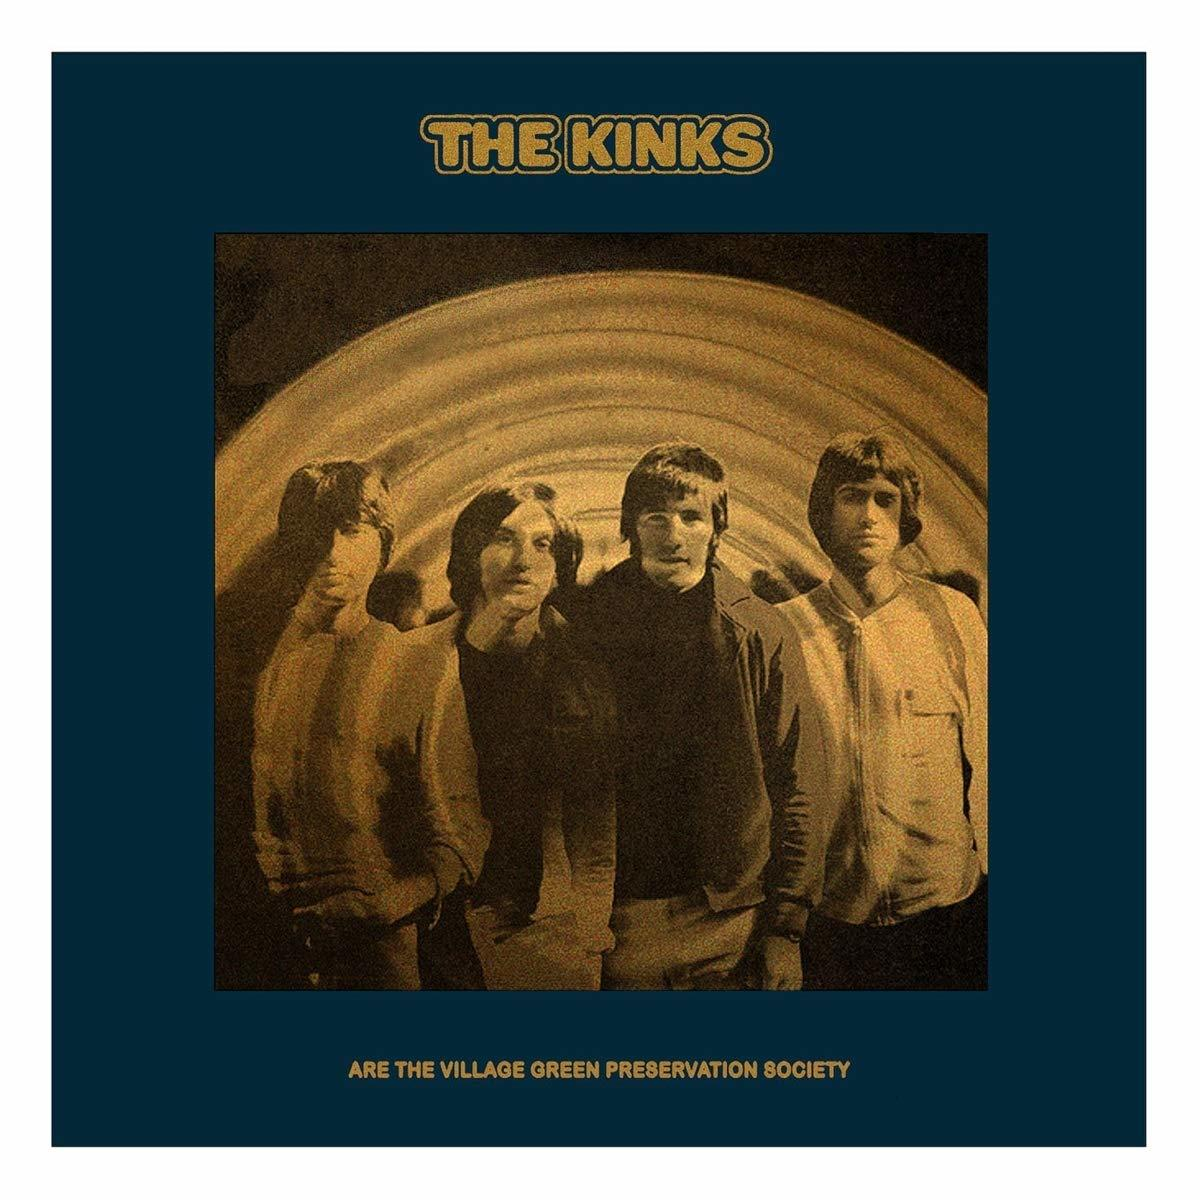 + Society - The Village Are - Bonus-CD) the Kinks Preservation Green (LP